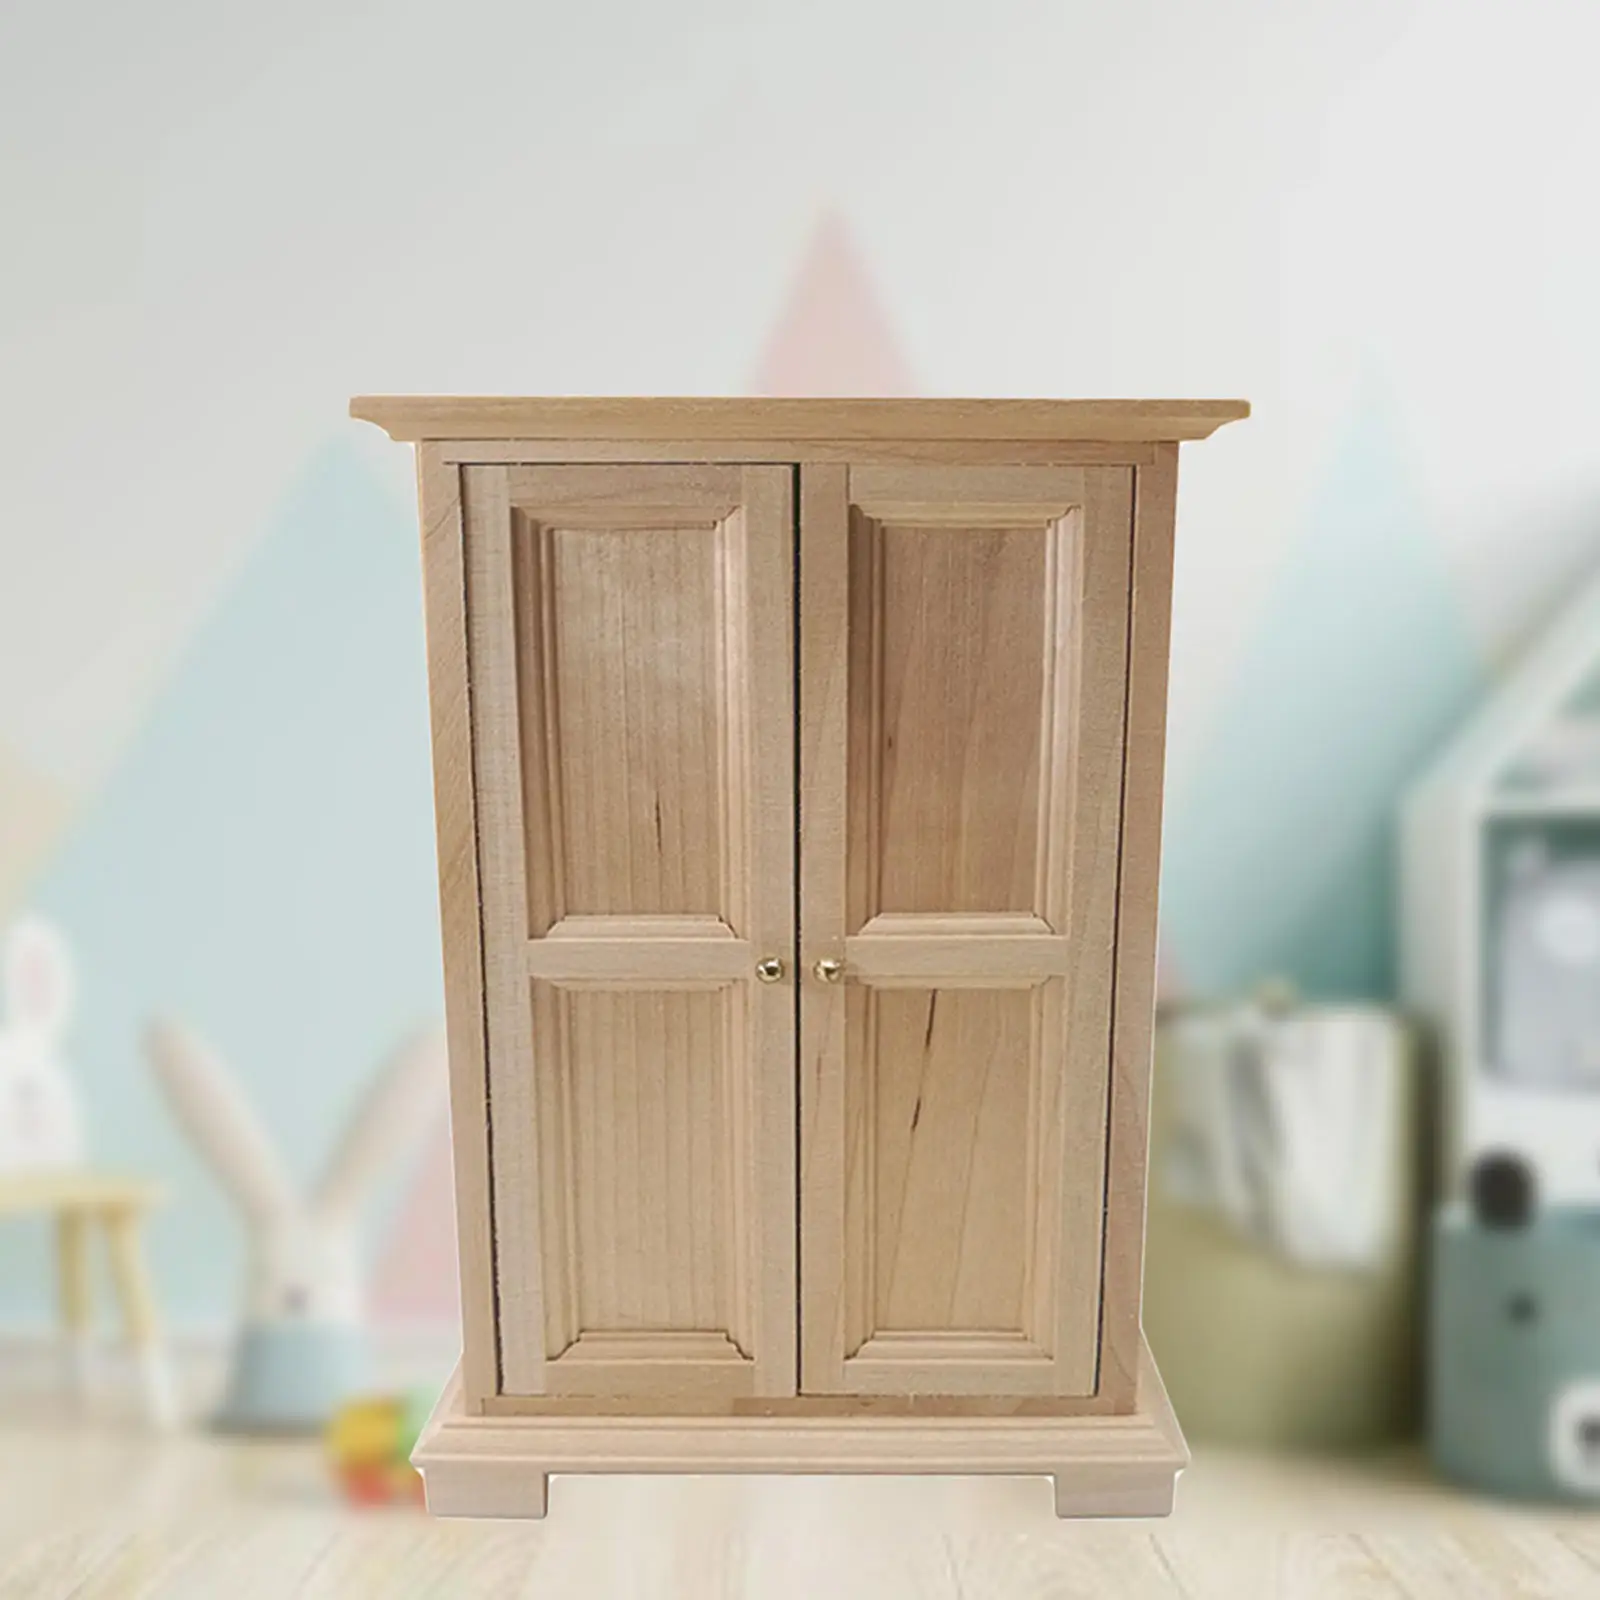 1:12 Miniature Dollhouse Wooden Wardrobe Vintage Double Door Closet for Landscape Home Bedroom